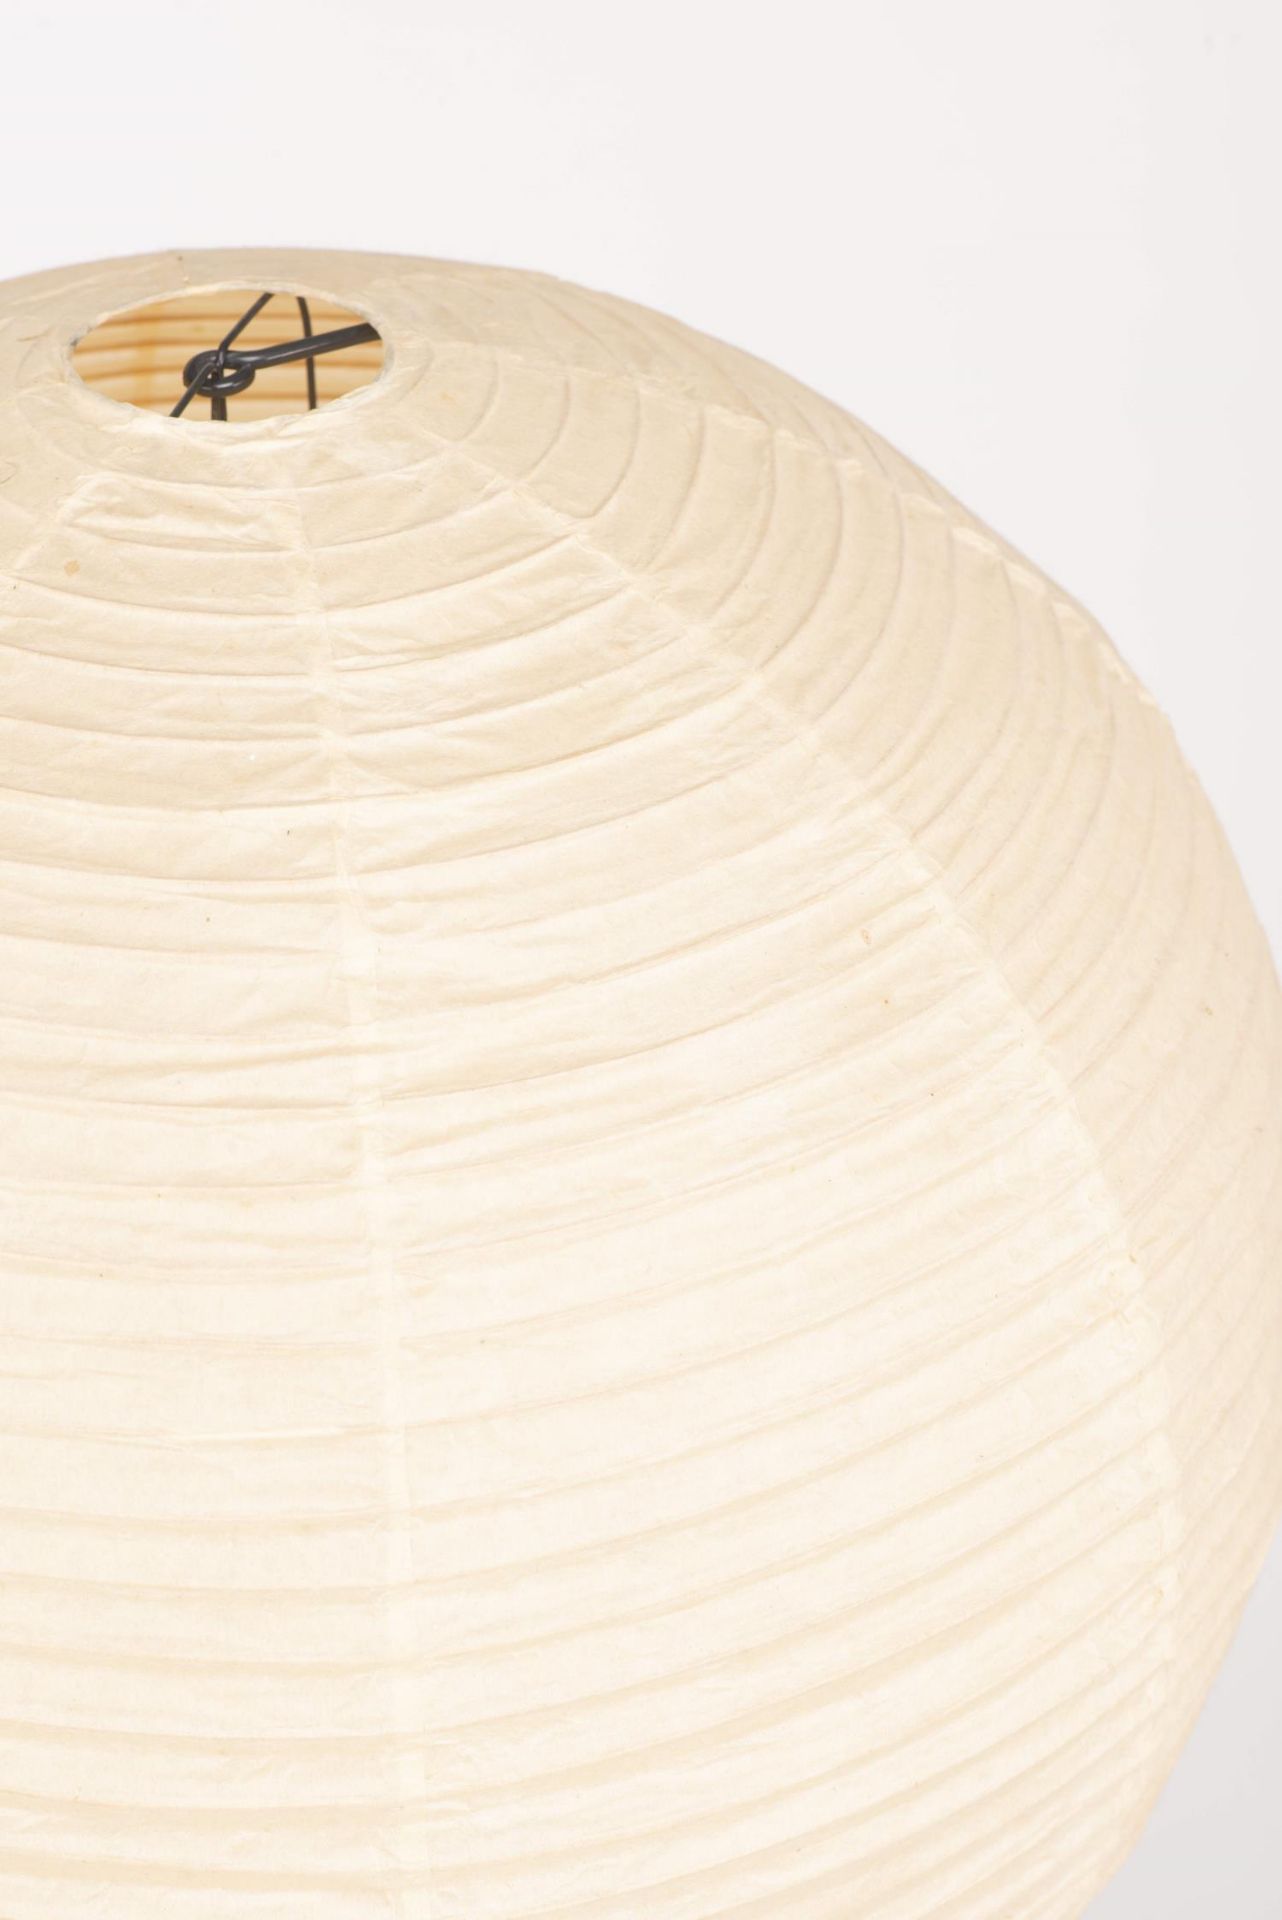 Isamu Noguchi (1904-1988), lampadaire en fer, papier Washi et bambou - Image 5 of 8